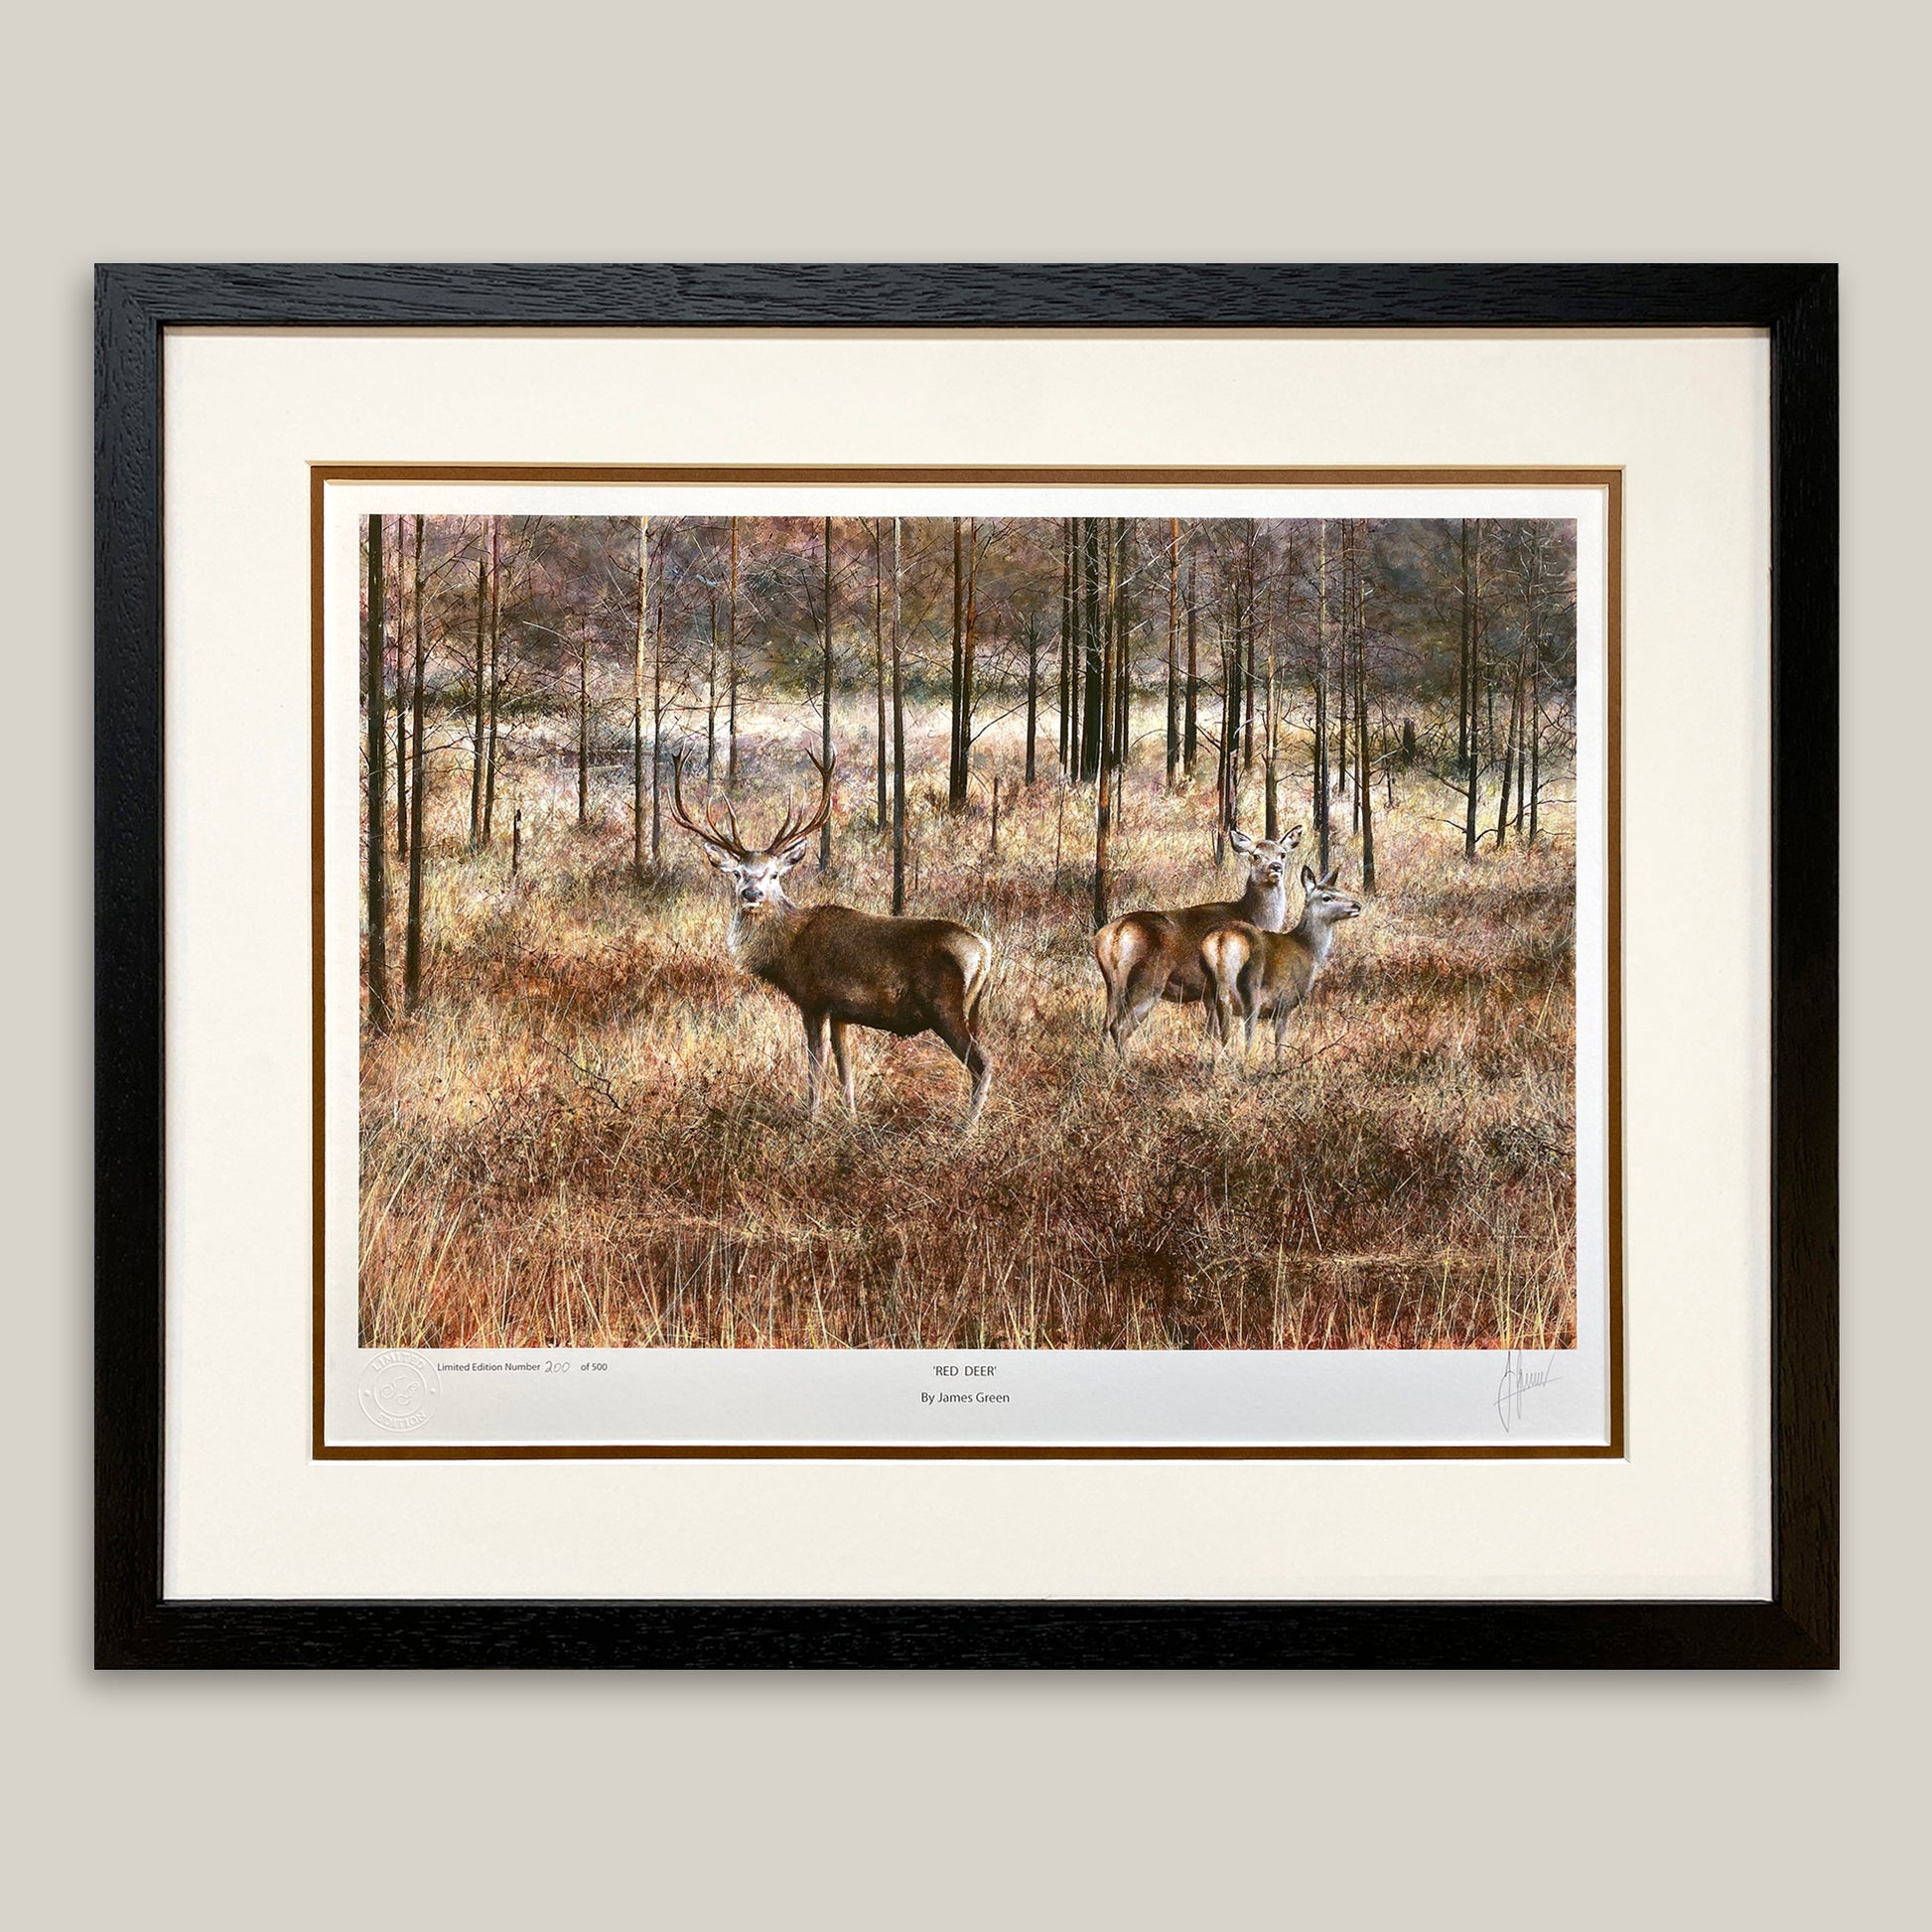 Red deer stag print in a black frame